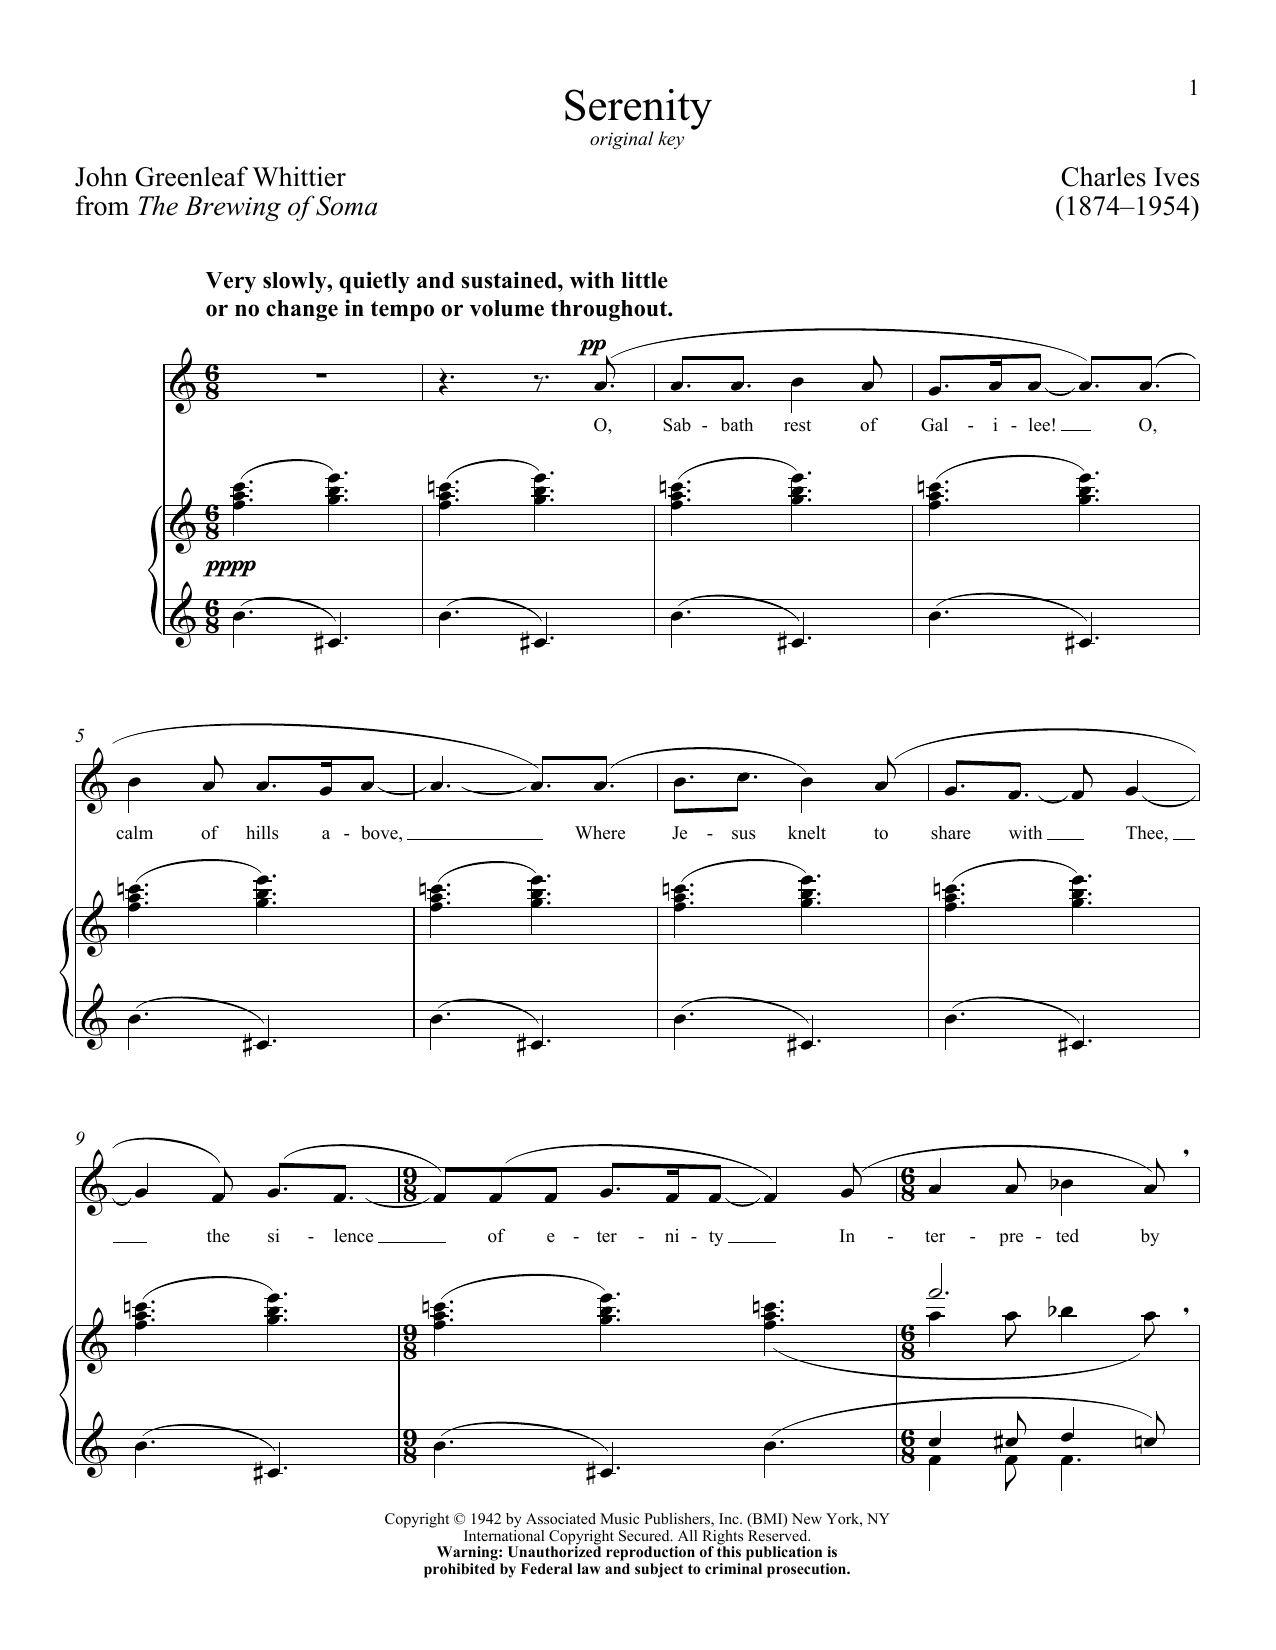 Download Charles Ives Serenity Sheet Music